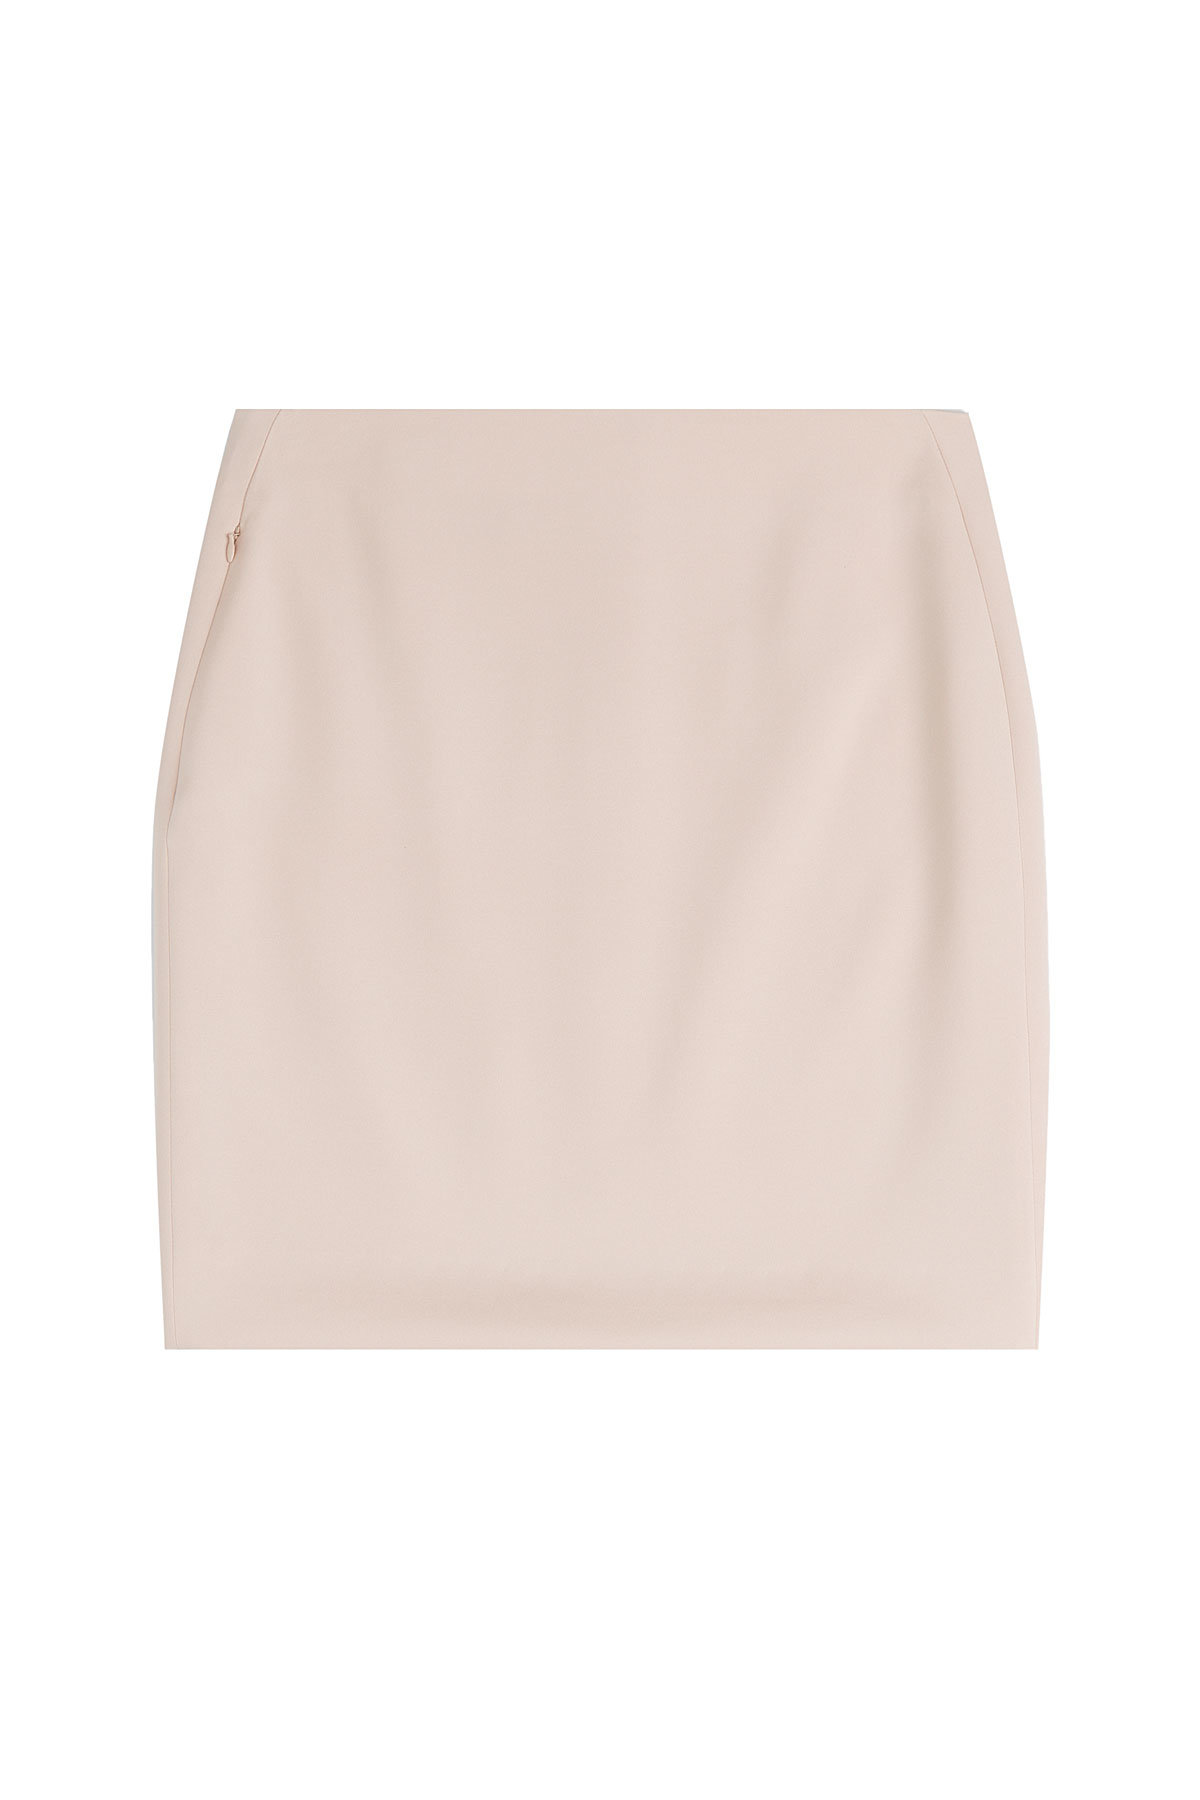 Akris - Silk Crepe Skirt